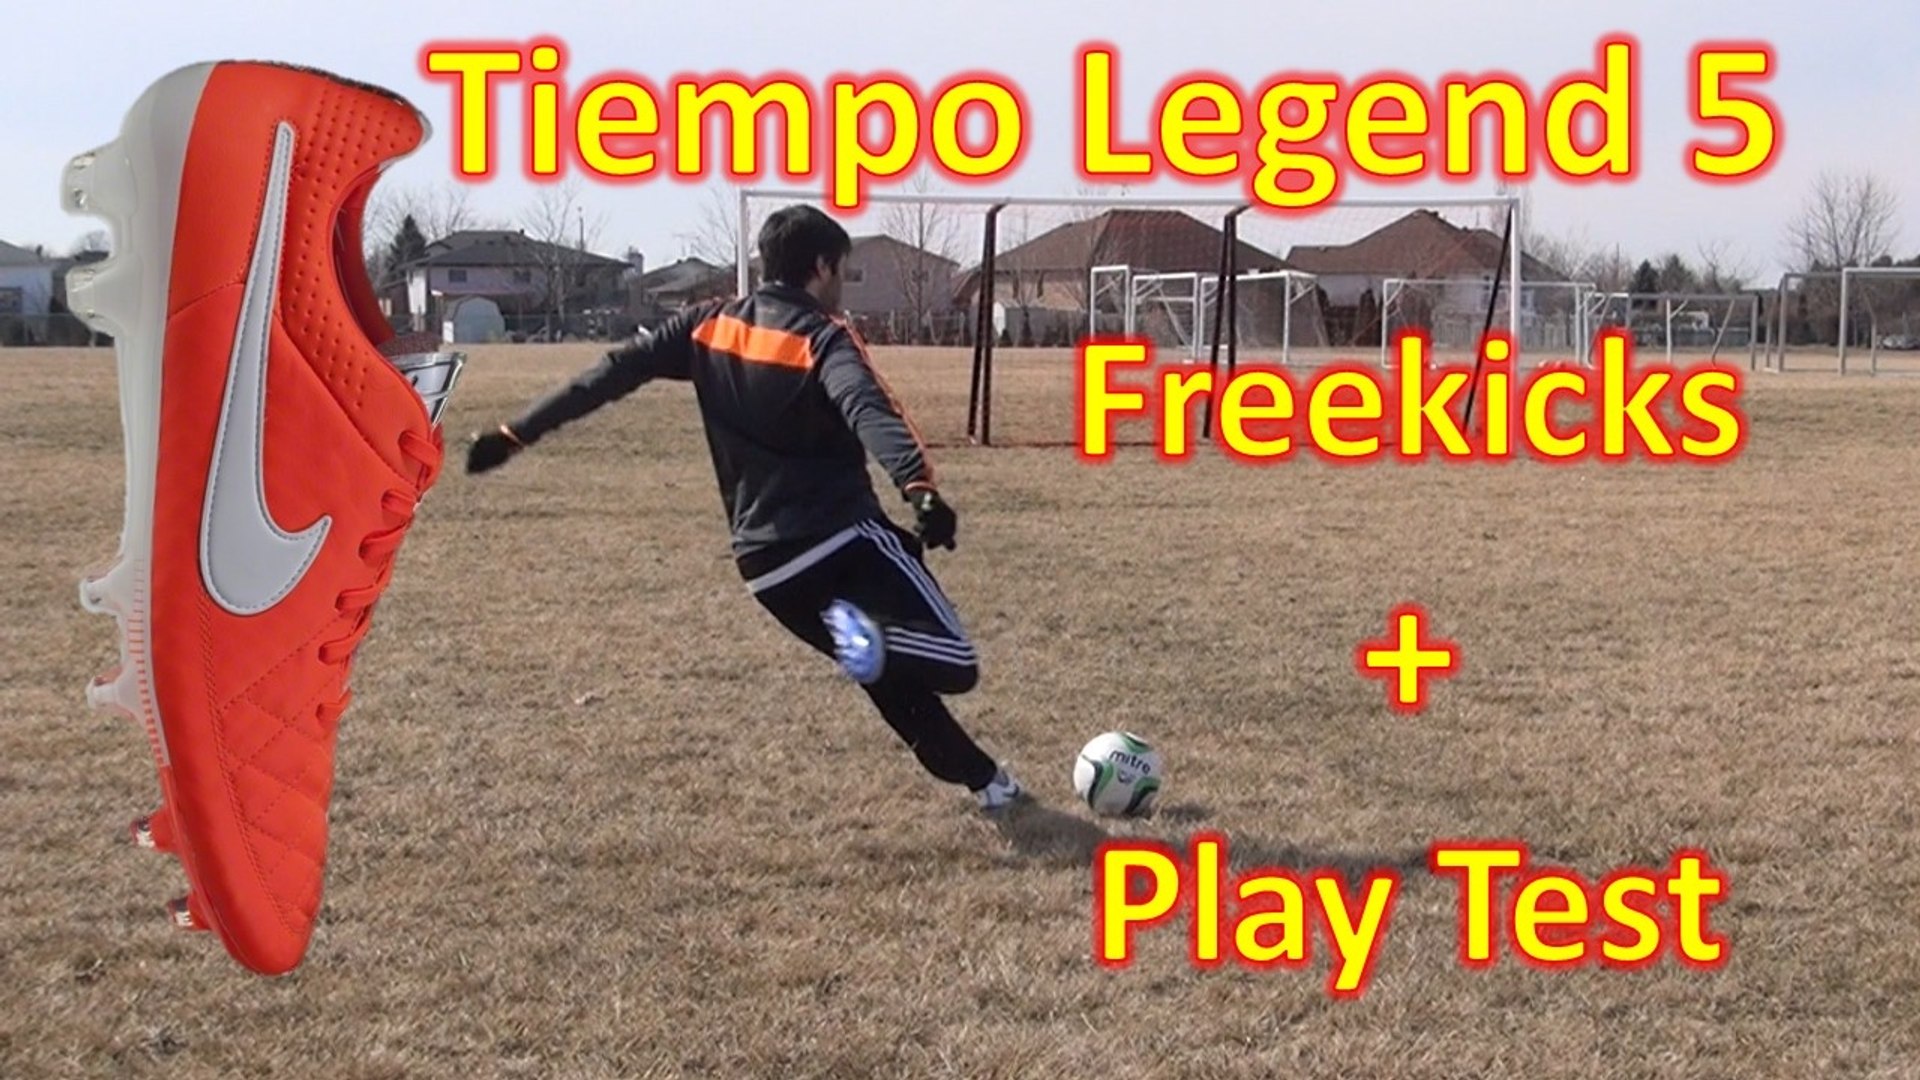 Nike Tiempo Legend 5 Review + FreeKicks & Play Test - video Dailymotion